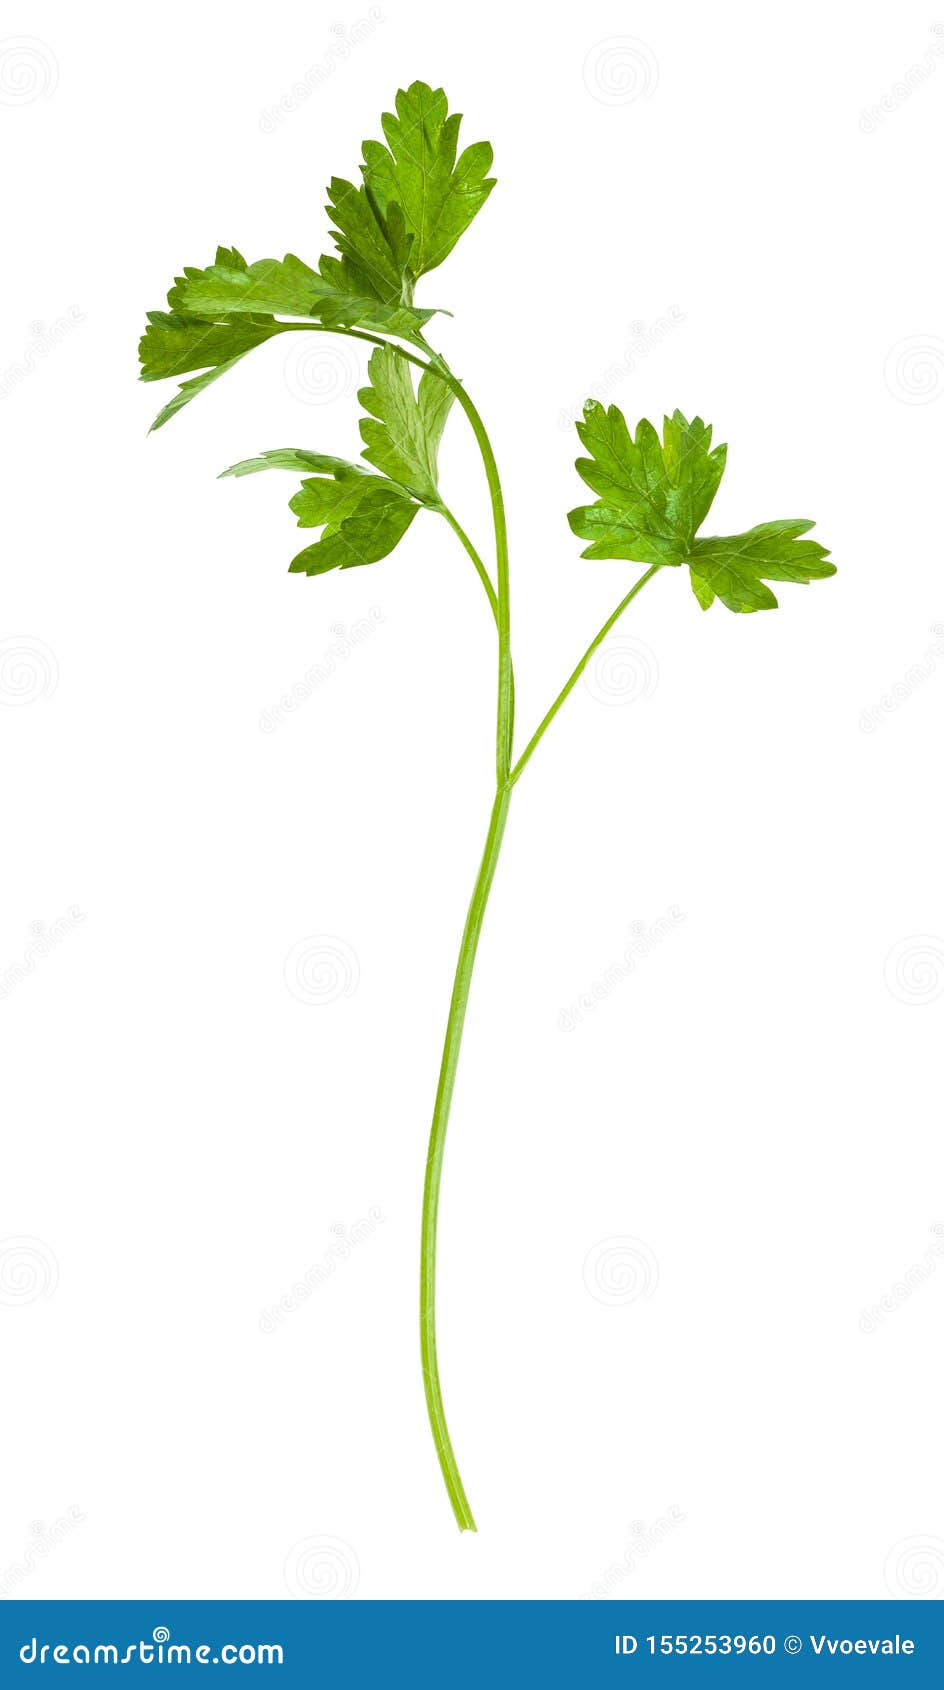 twig of fresh green parsley herb  on white